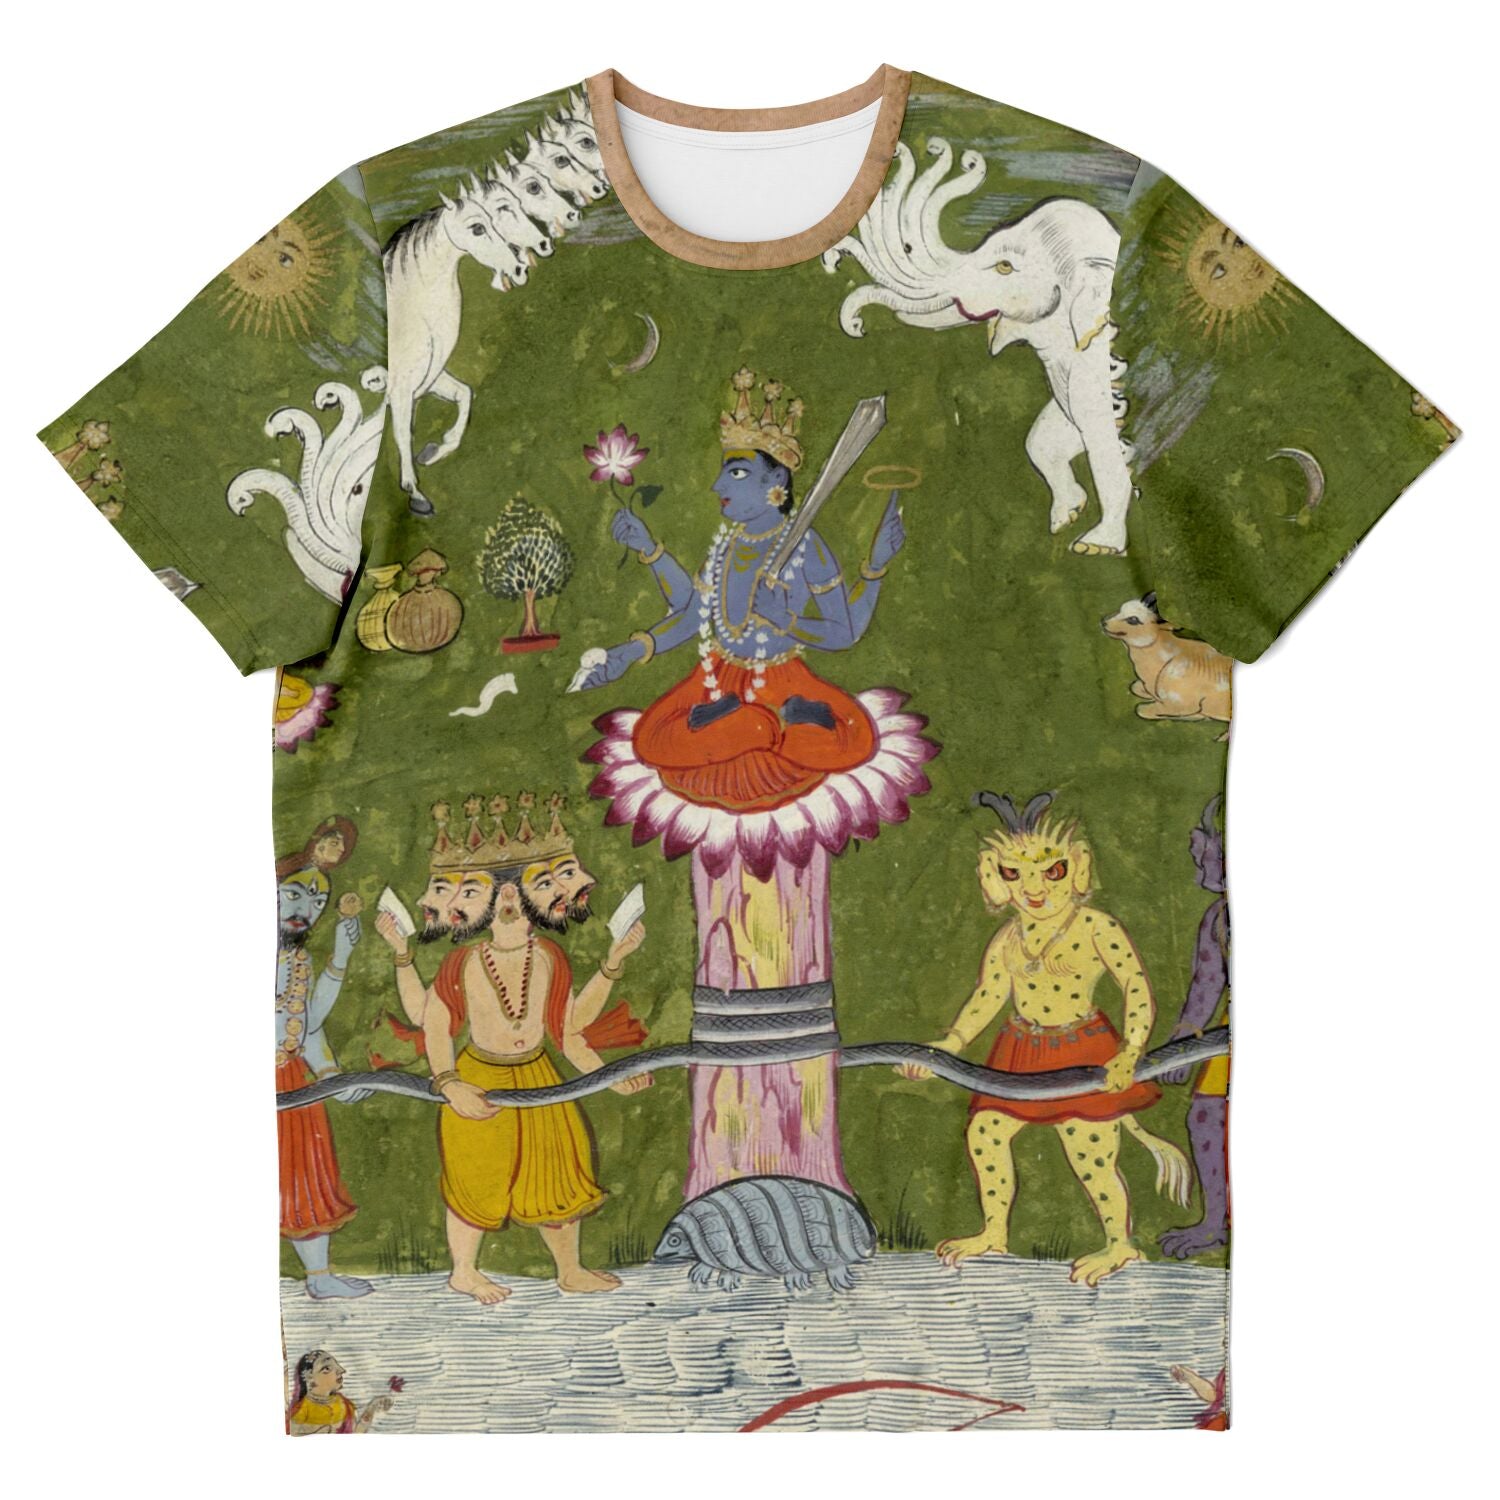 T-shirt XS Vishnu Consumes the Poison Halahala as His Tortoise Avatar Kurma and Saves the World | Sacred Vintage Indian Graphic Art T-Shirt